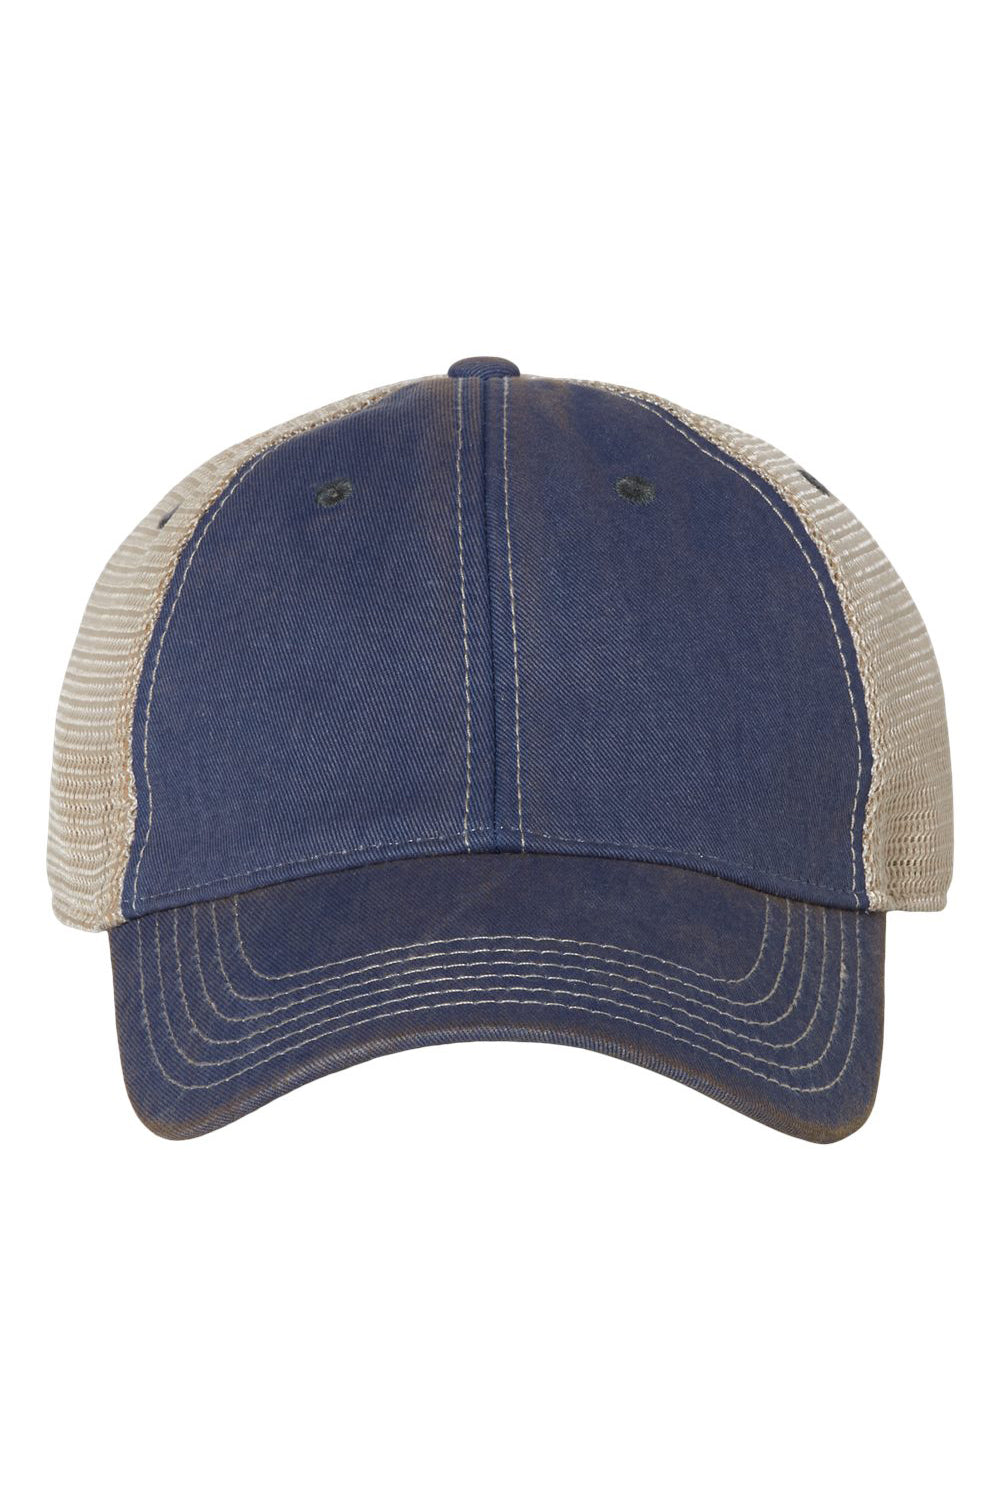 Legacy OFA Mens Old Favorite Trucker Hat Royal Blue/Khaki Flat Front